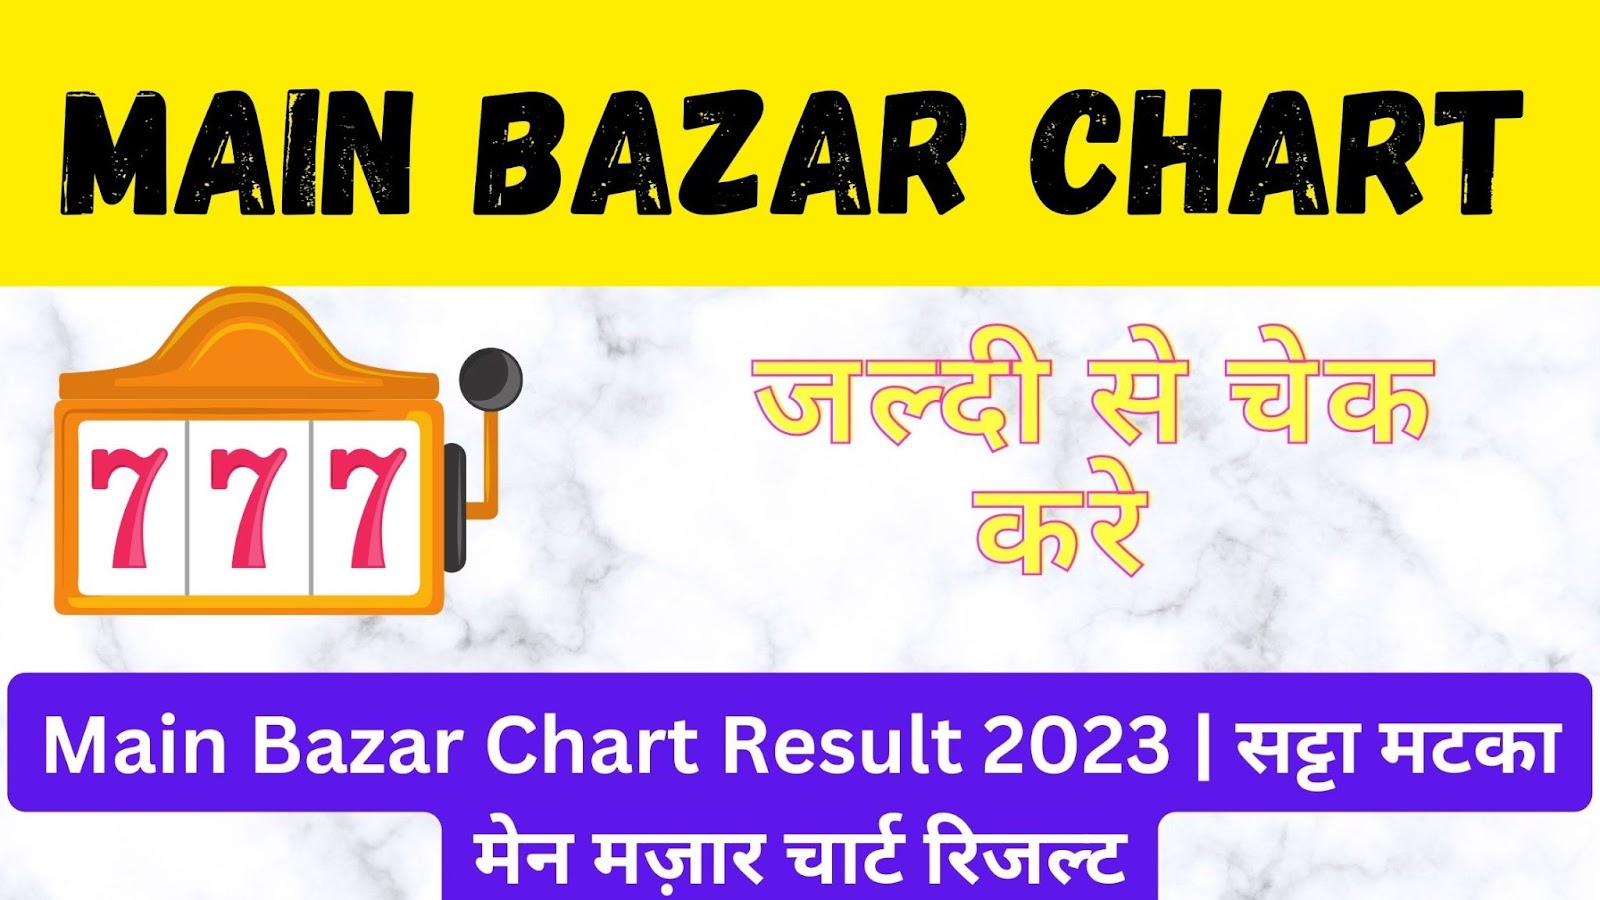 Satta Matka Kalyan Matka Chart Result 23 December 2022 | सट्टा मटका कल्याण  मटका चार्ट का रिजल्ट 23 दिसंबर 2022 | wittyflick: Hindi News, Satta King,  Kalyan Chart, Sarkari Result, Tips, Health